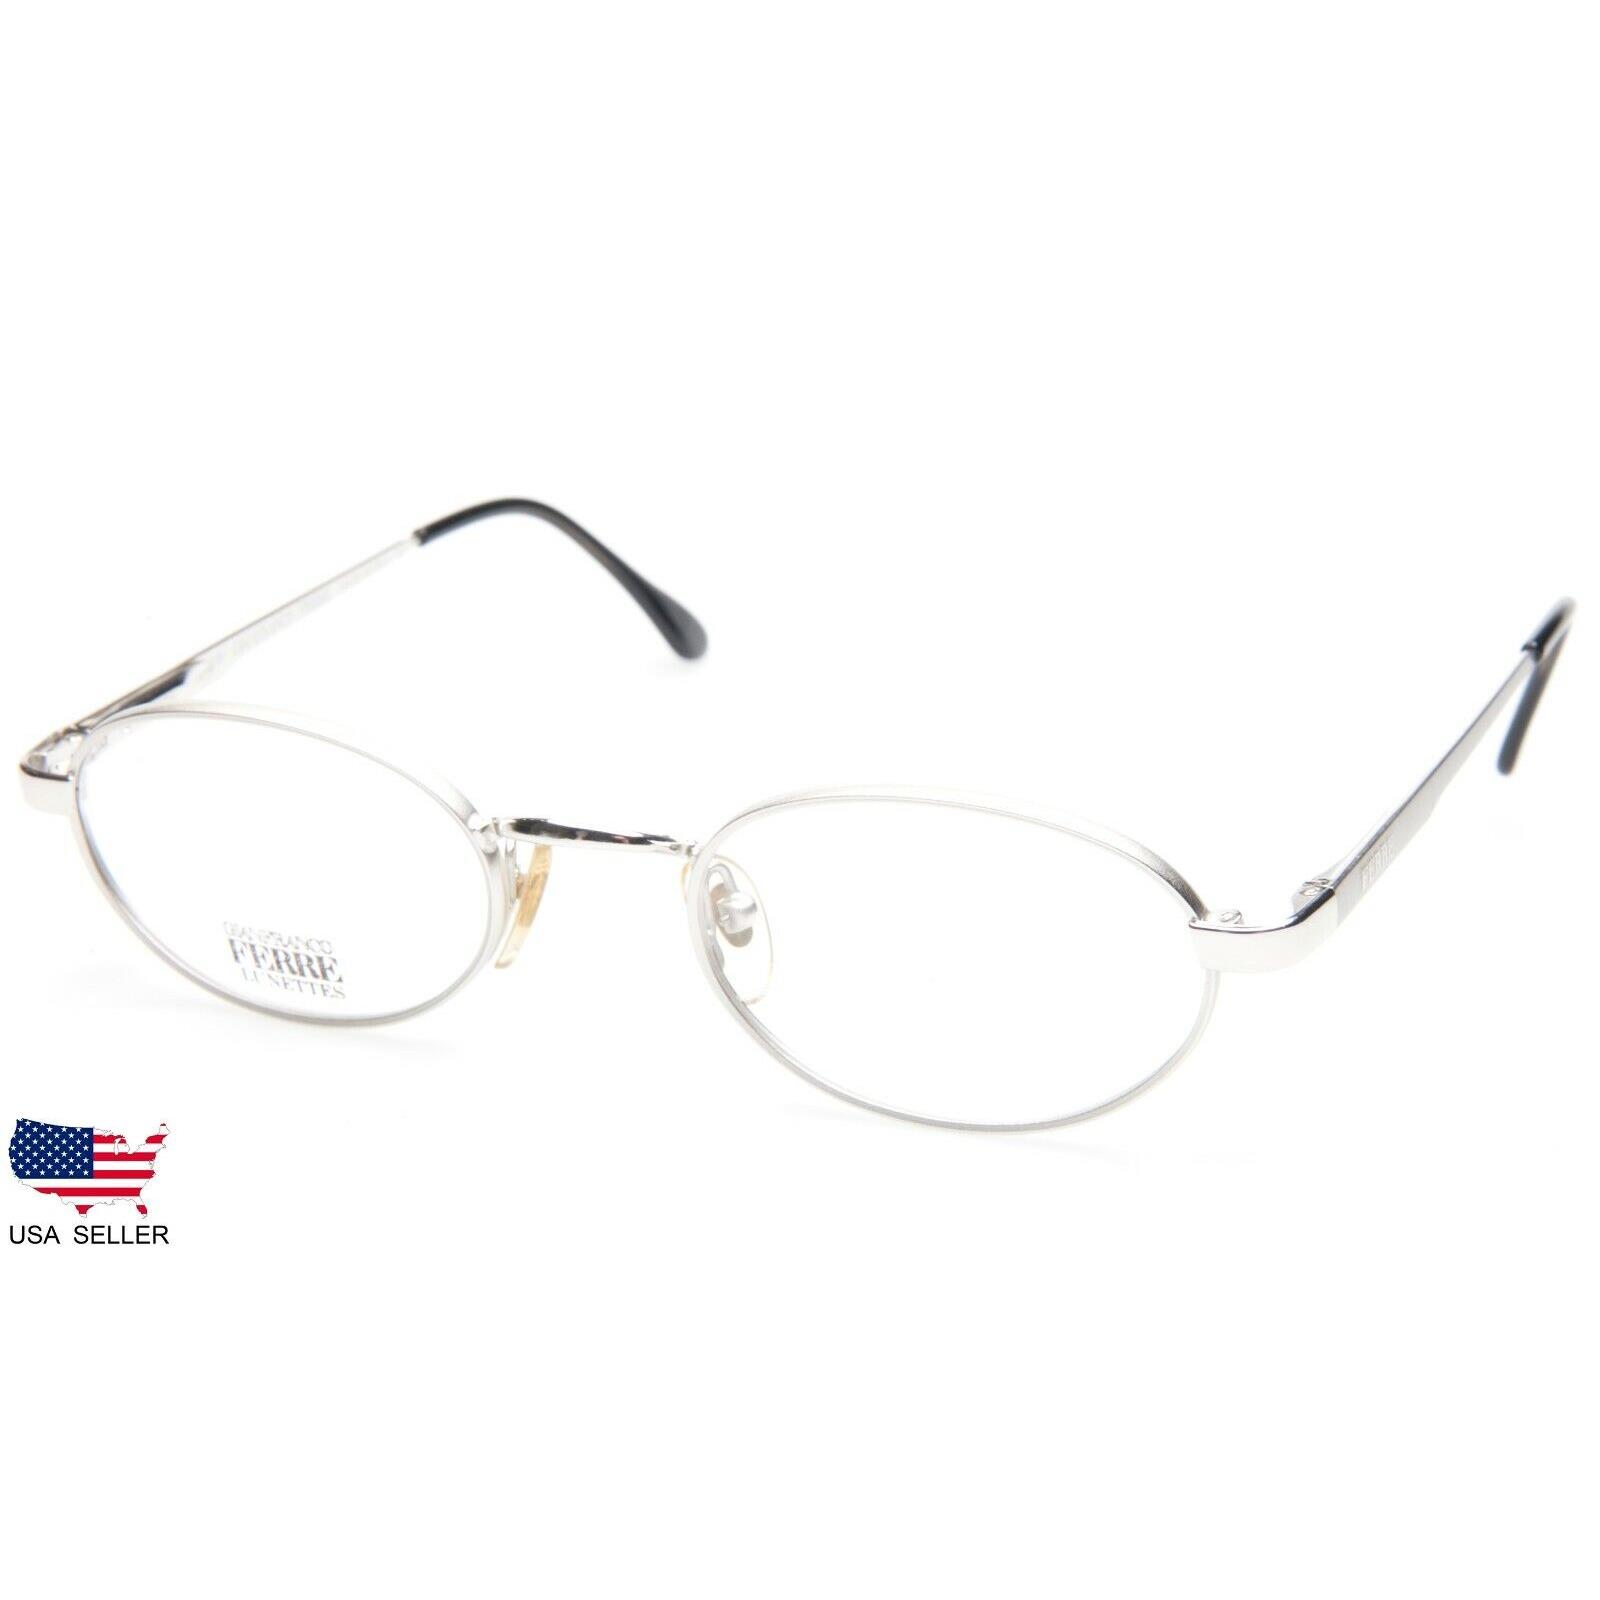 Gianfranco Ferre Gff 360 SC9 Silver Eyeglasses Glasses 49-21-135 B33mm Italy